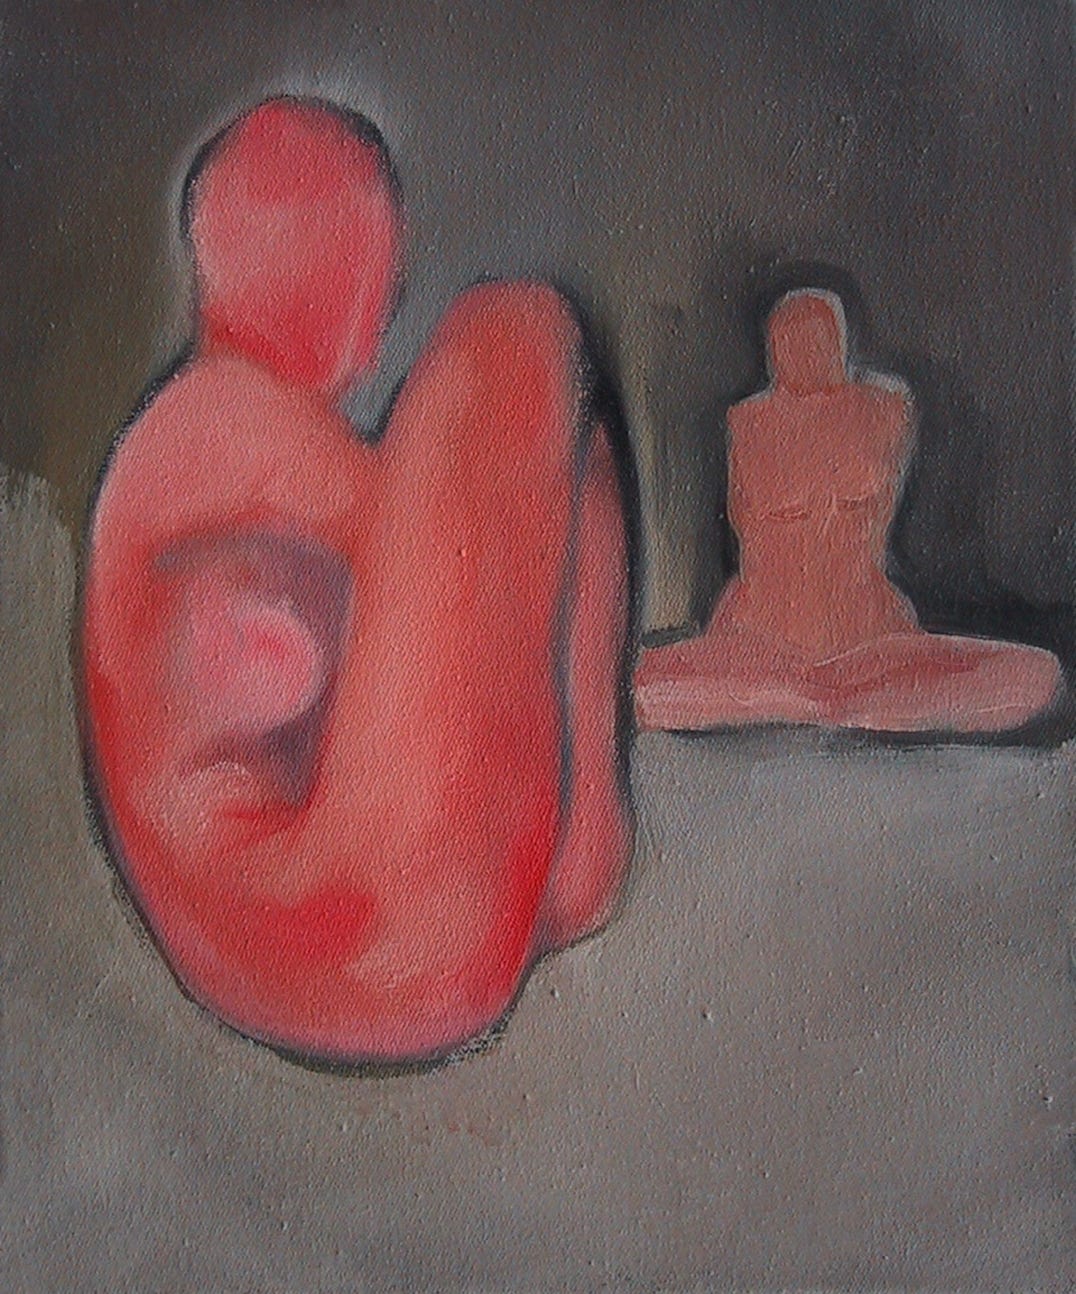 25x21 cm, oil on canvas, 1999